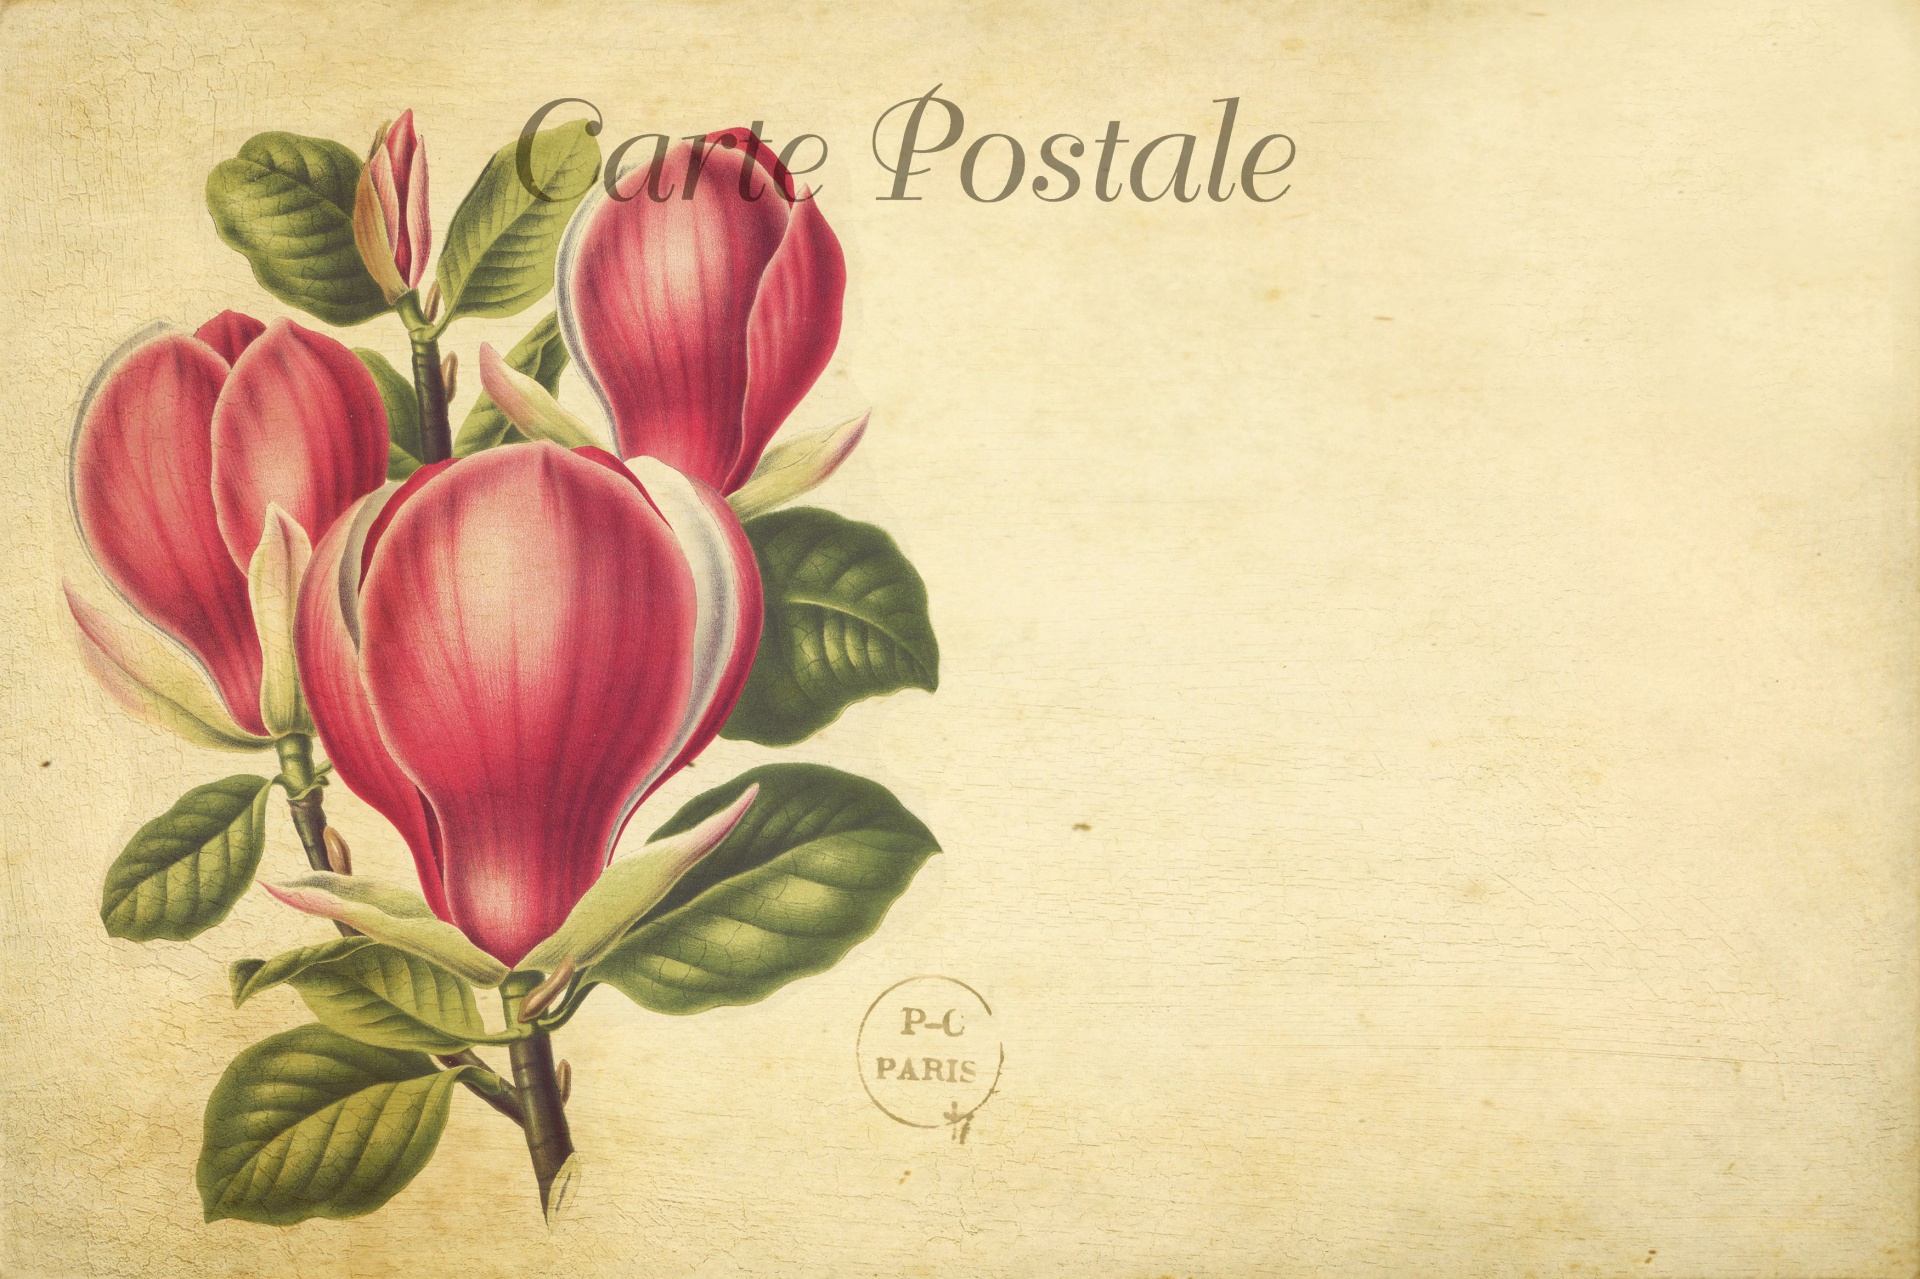 Vintage art illustration of colorful magnolia flowers on old french postcard